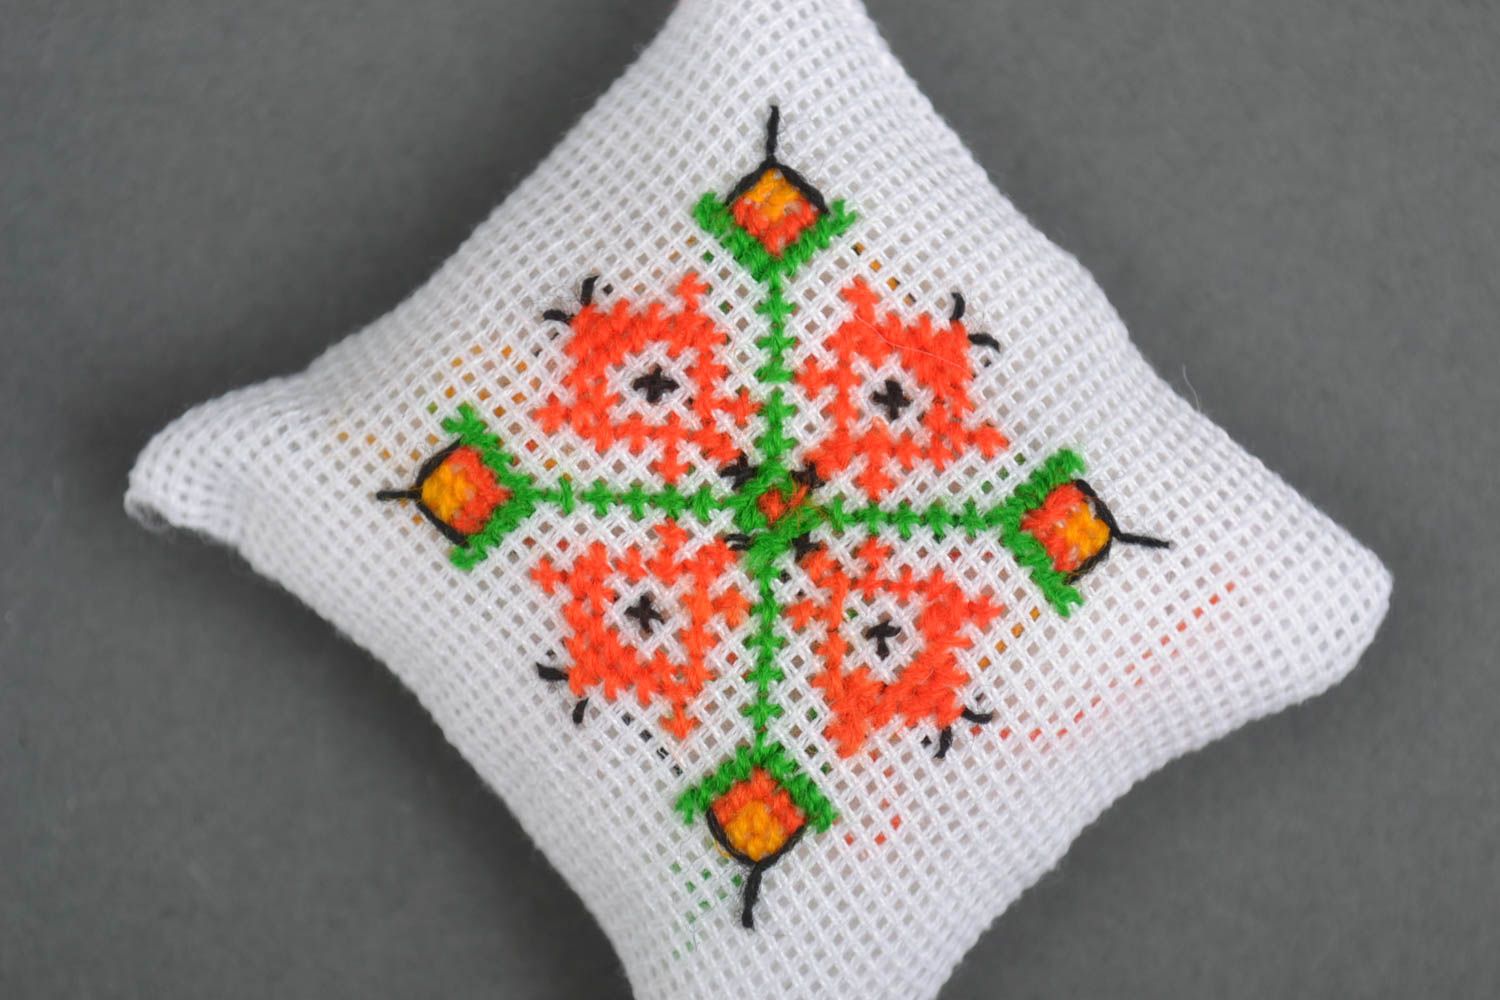 Handmade pincushions embroidery supplies 7 pin cushions needle holders gift idea photo 2